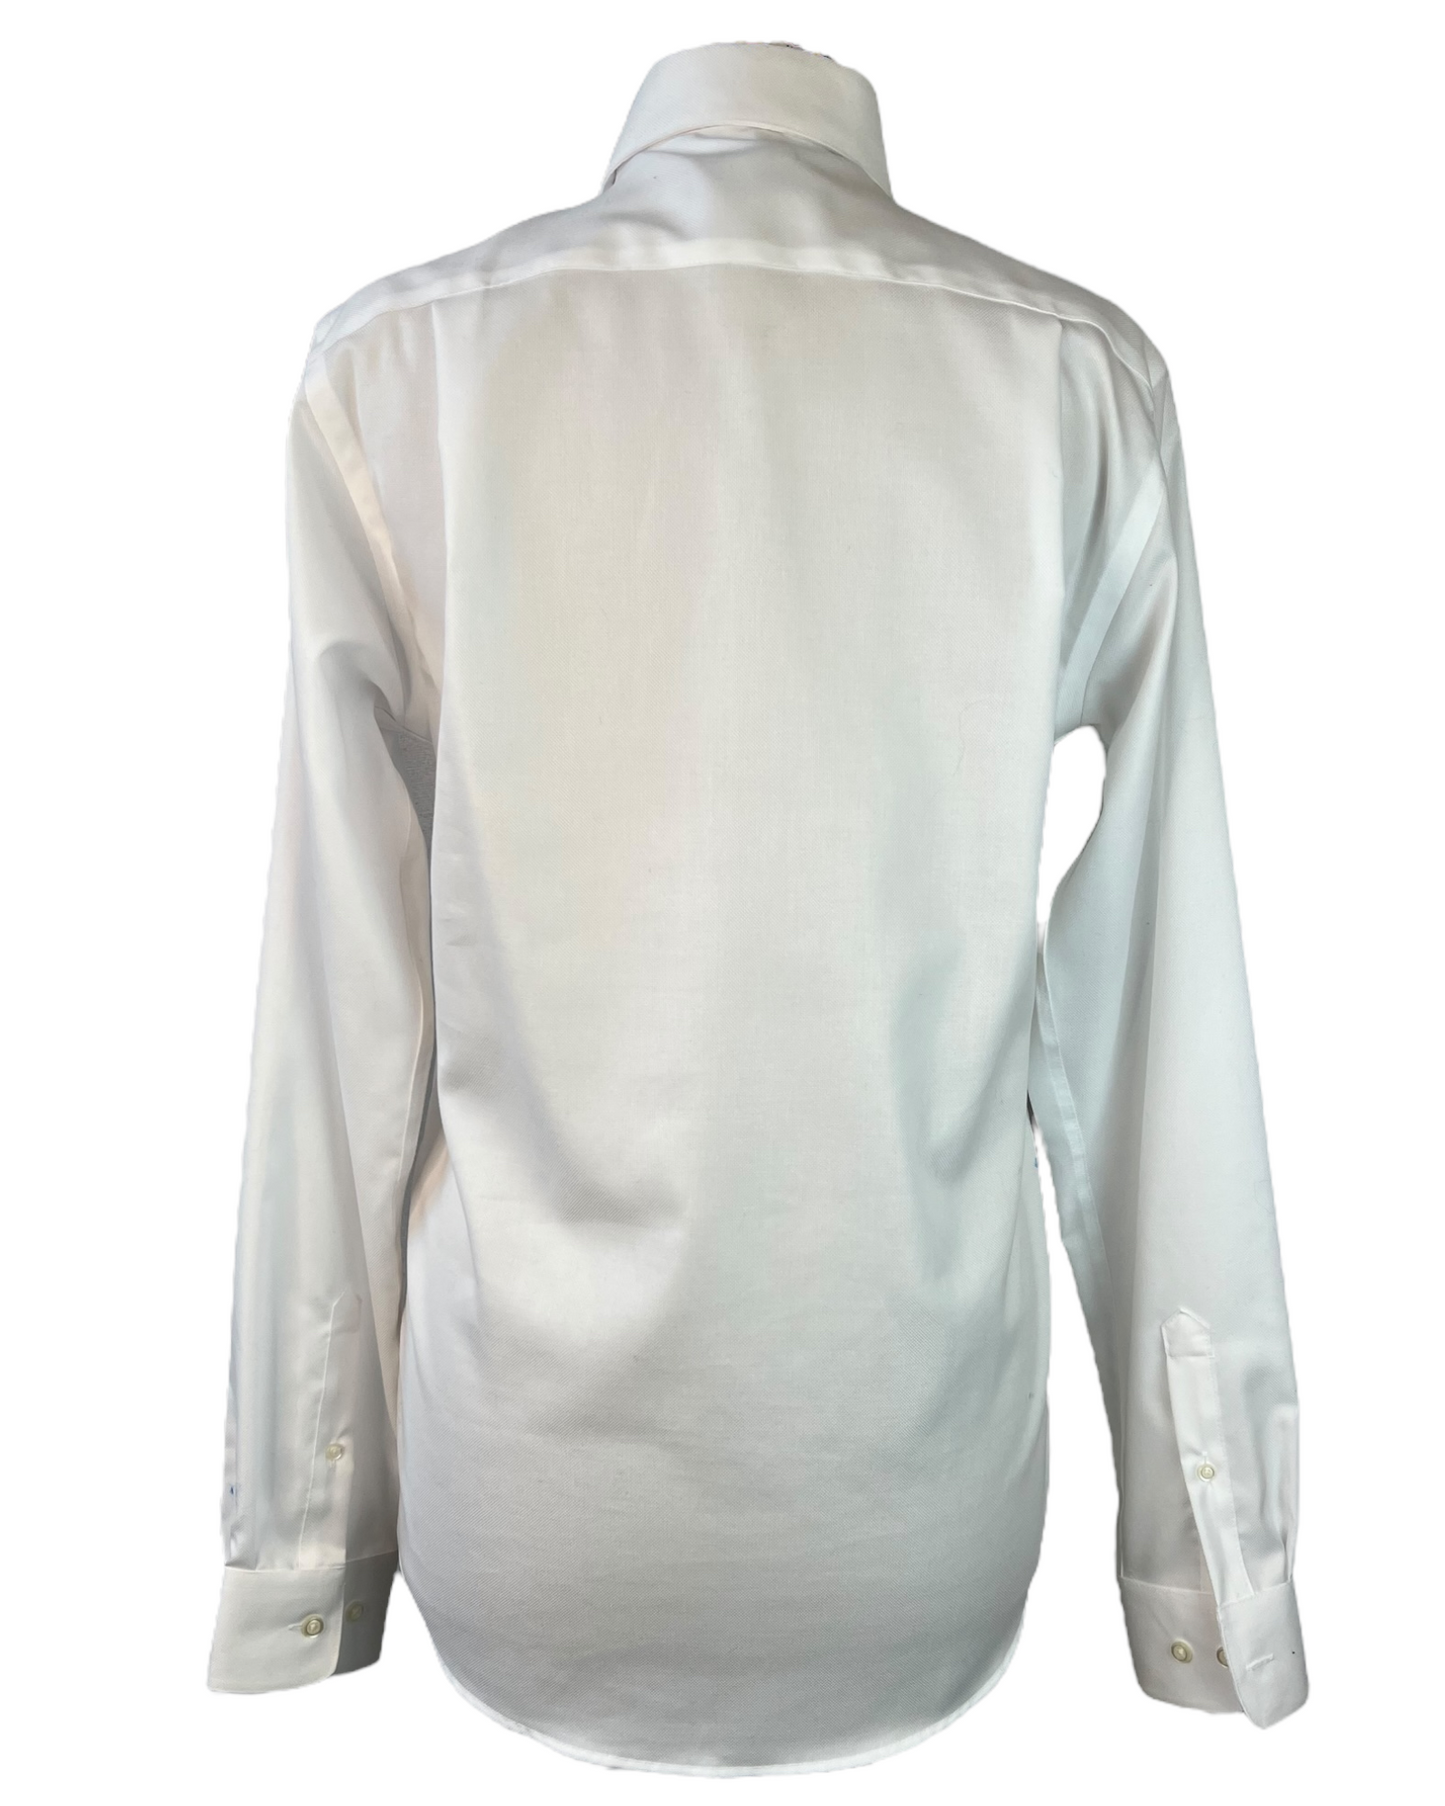 Contemporary Classic White Button Down Shirt